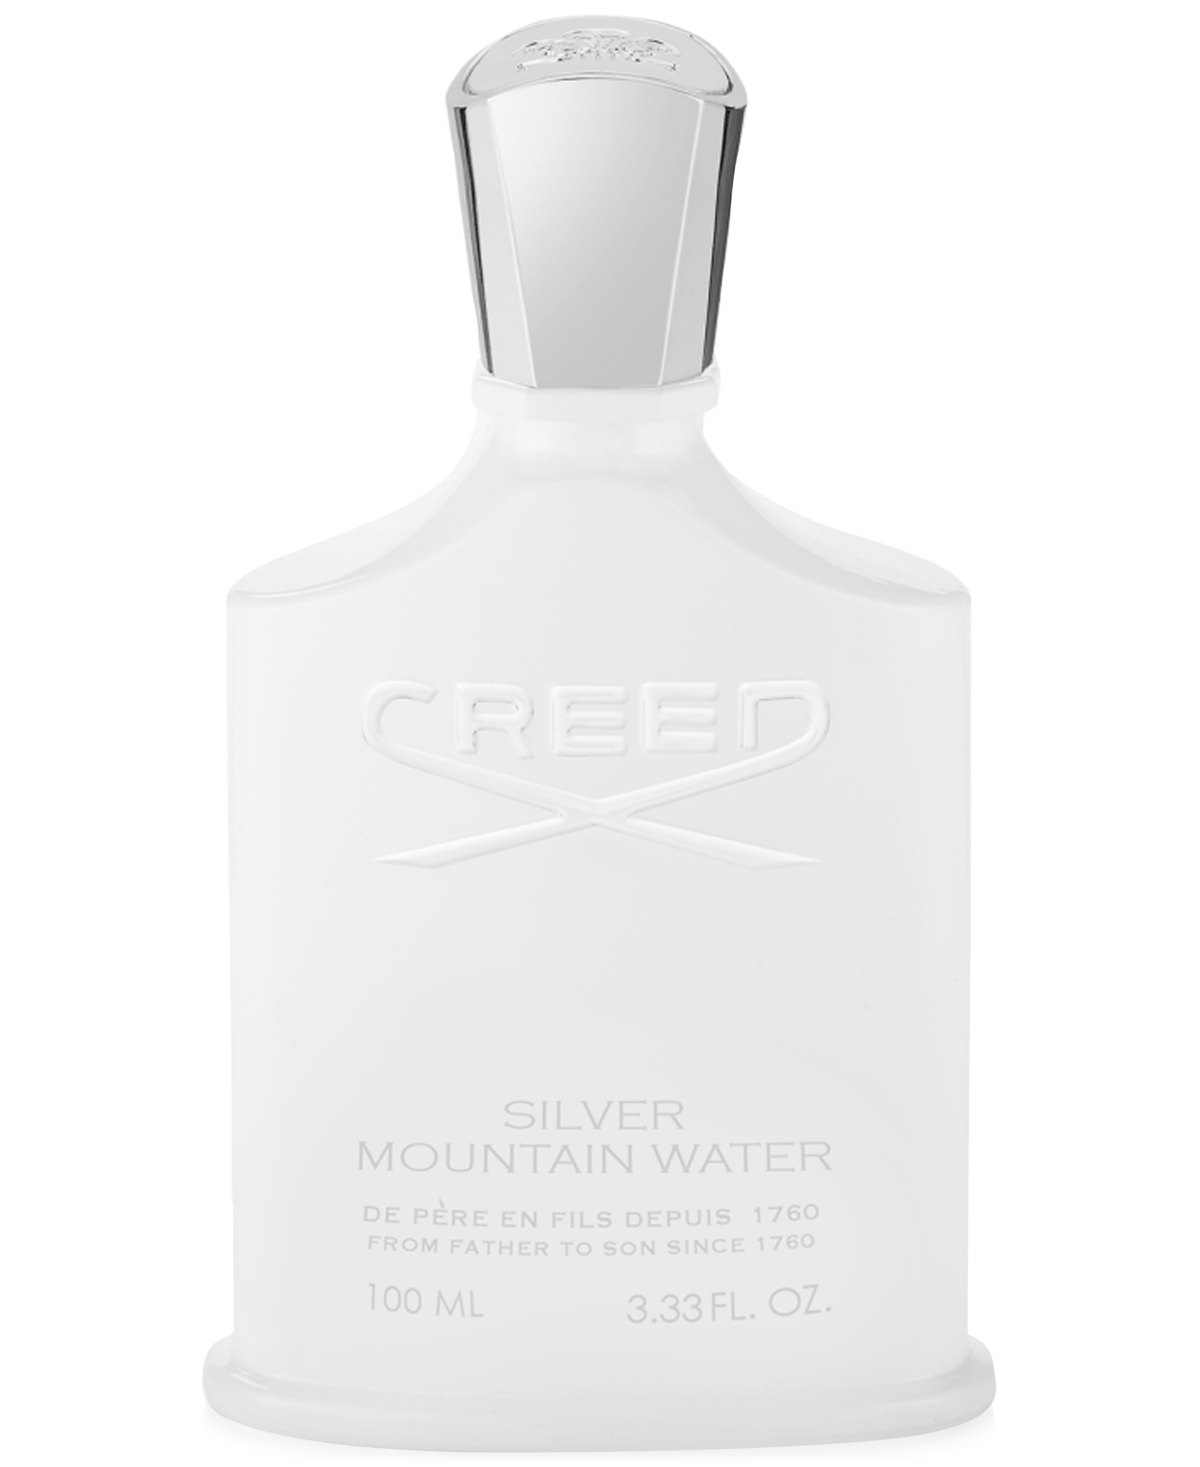 Creed Silver Mountain Water, 3.3 Oz.